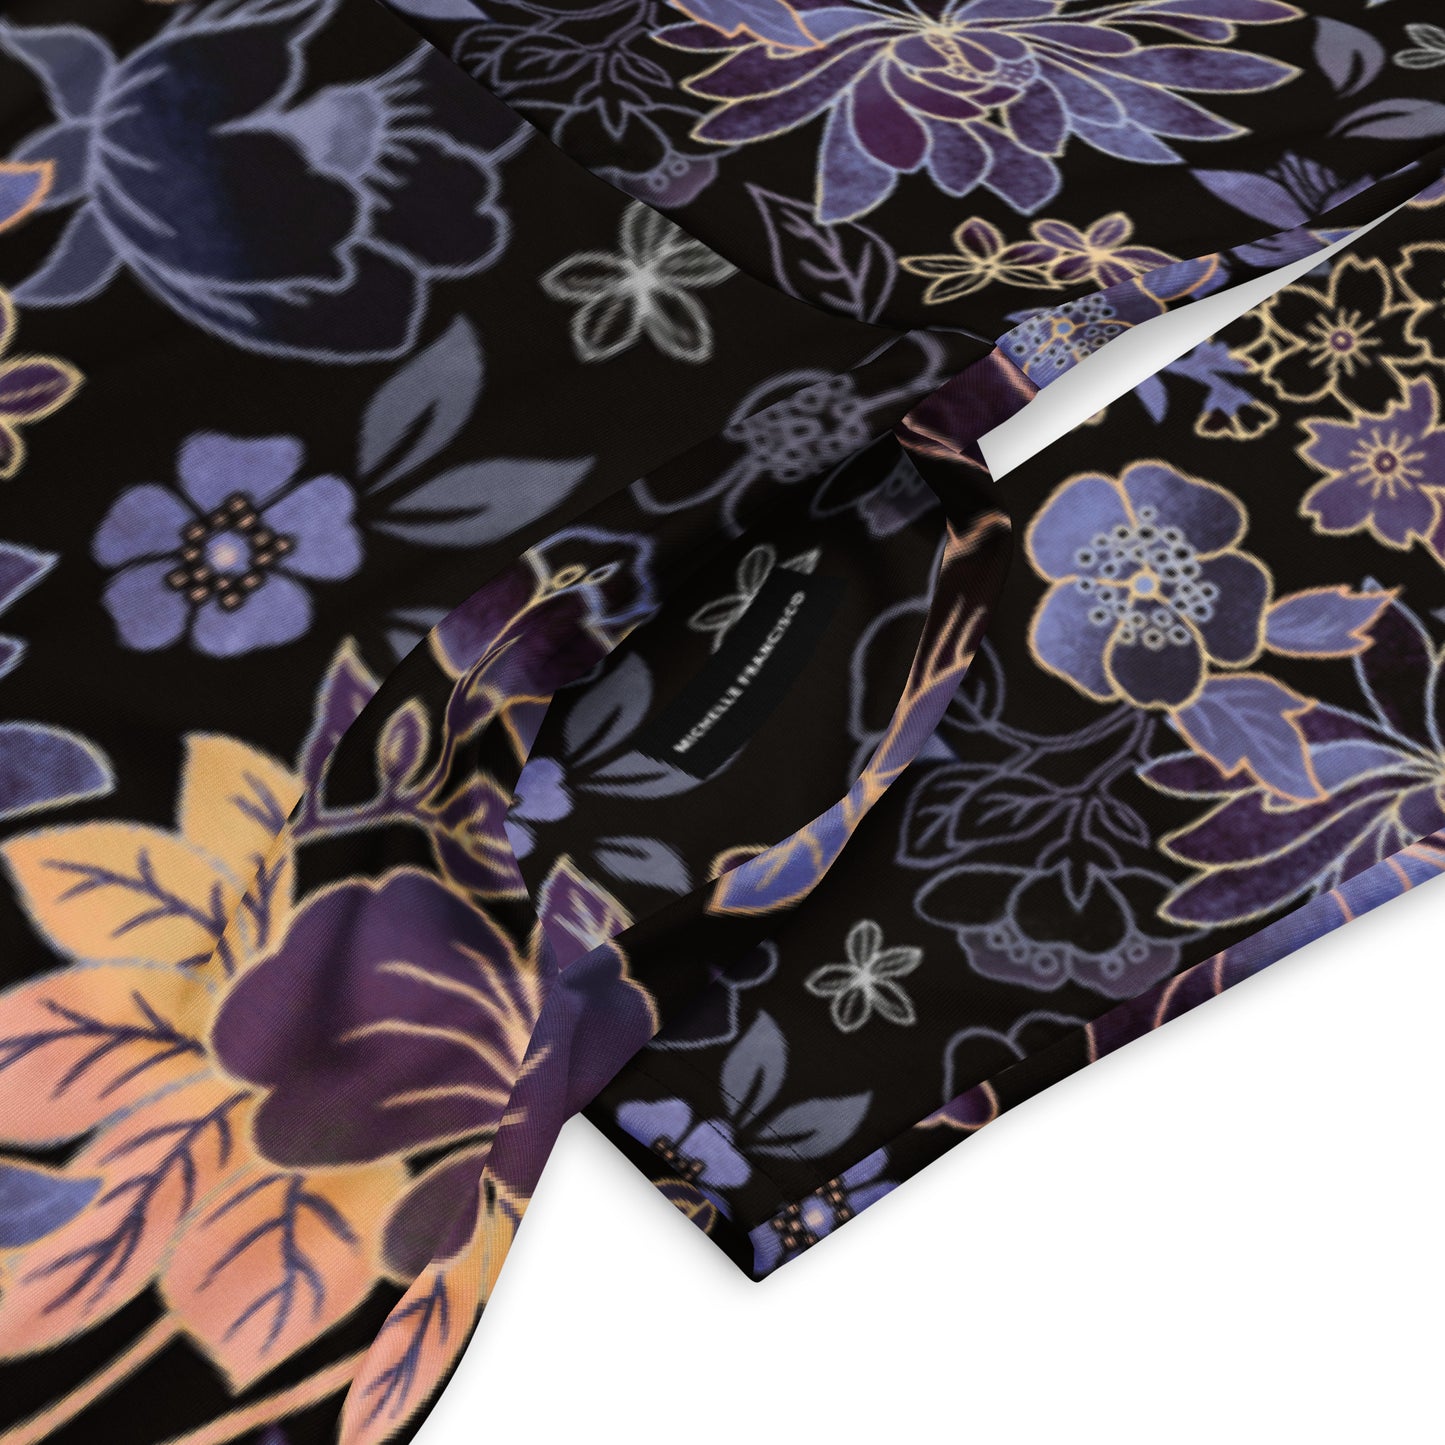 Dark Floral Long Sleeve Midi Dress - Michelle Francisco